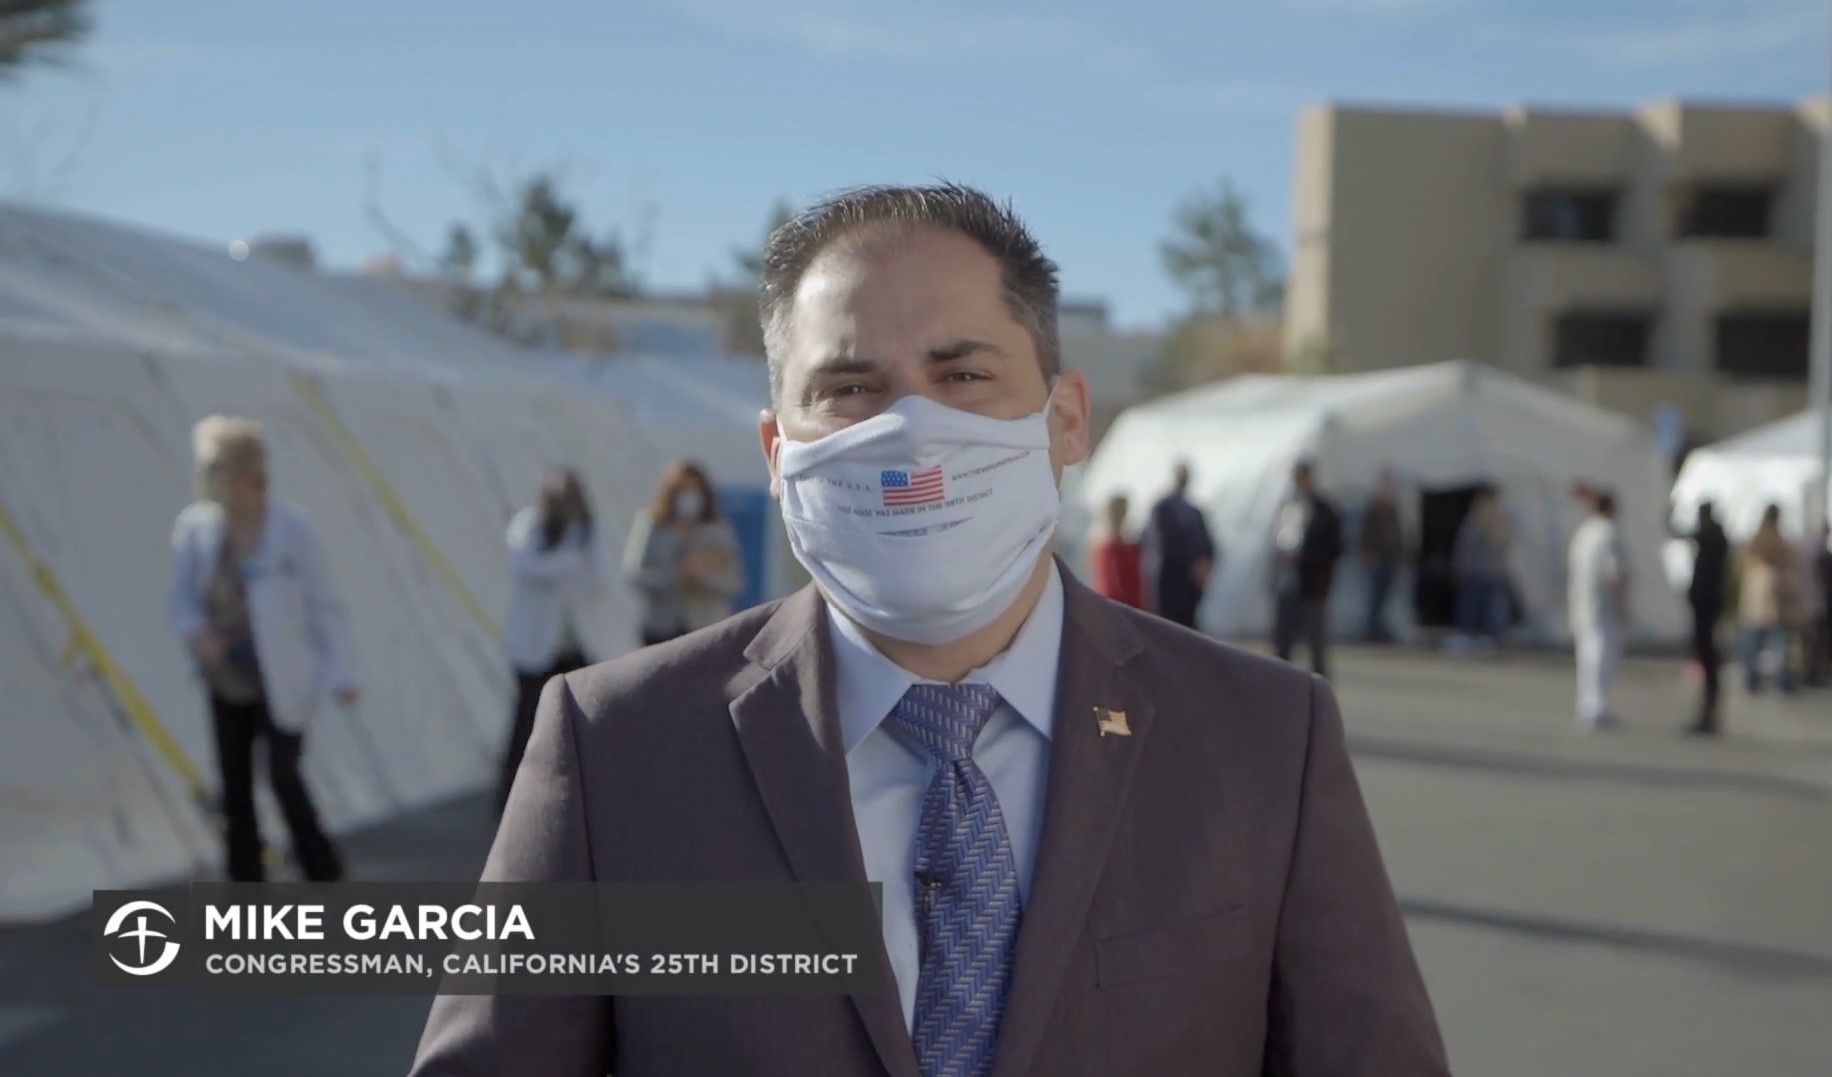 U.S. Representative Congressman Mike Garcia has received a tour of the Samaritan's Purse Emergency Field Hospital in Los Angeles County.